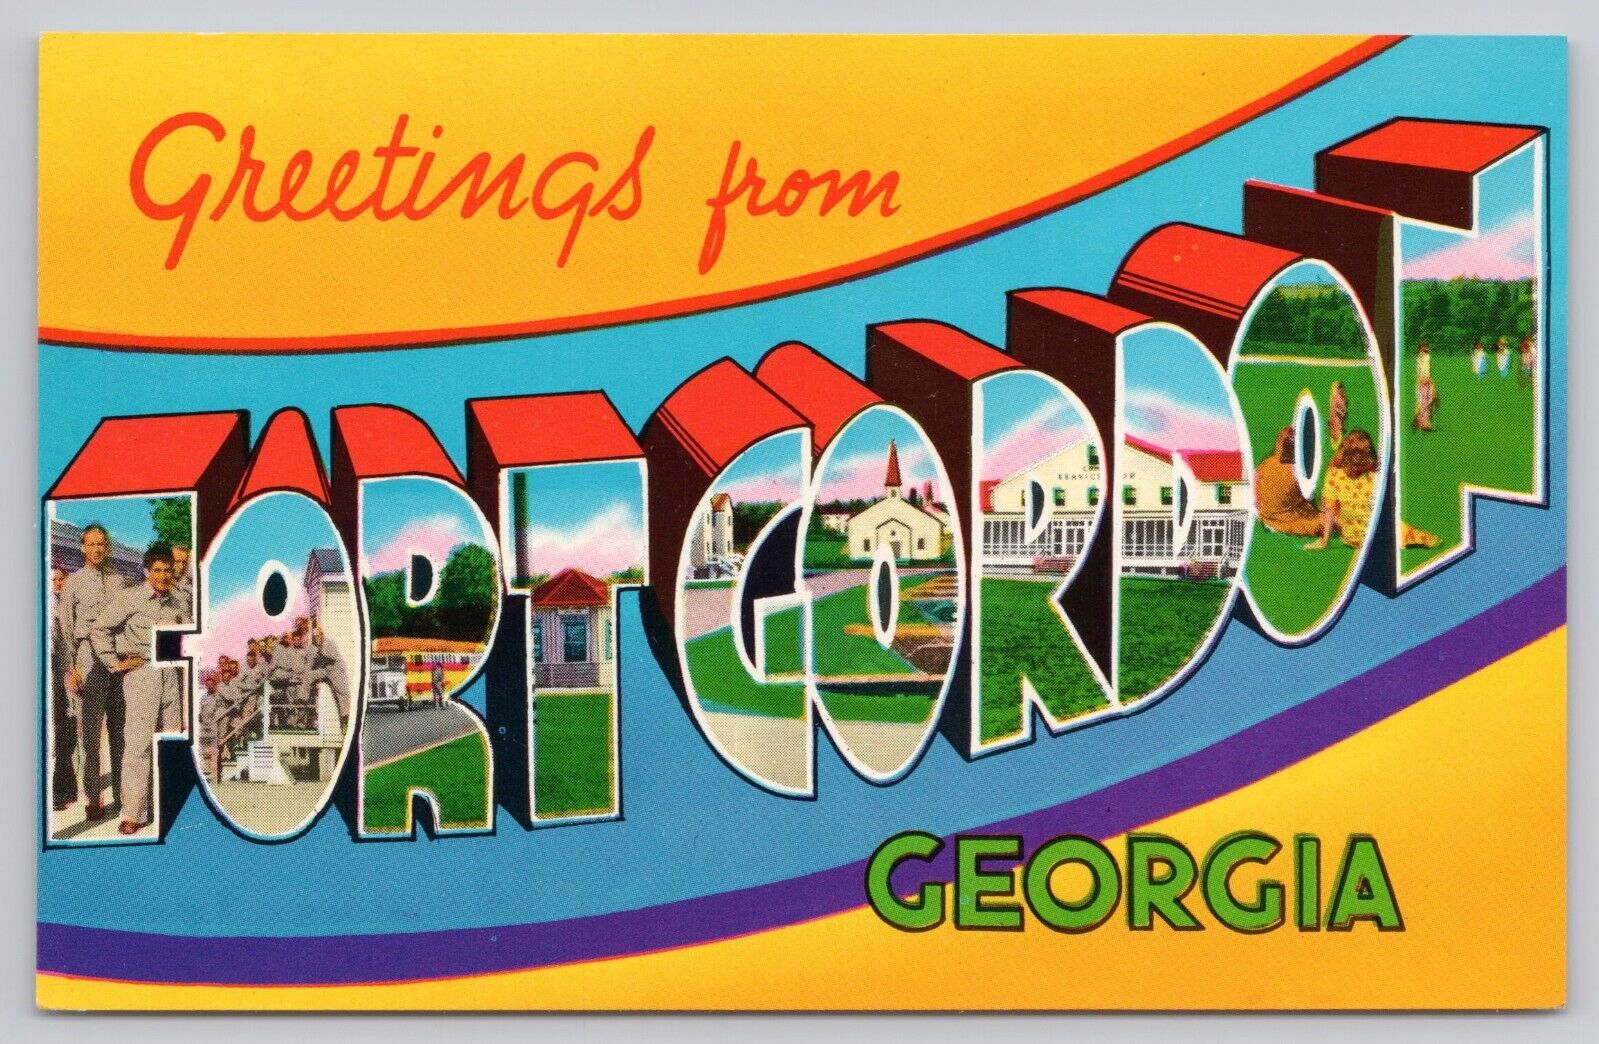 Fort Gordon Georgia, Large Letter Greetings, US Army Base, Vintage Postcard